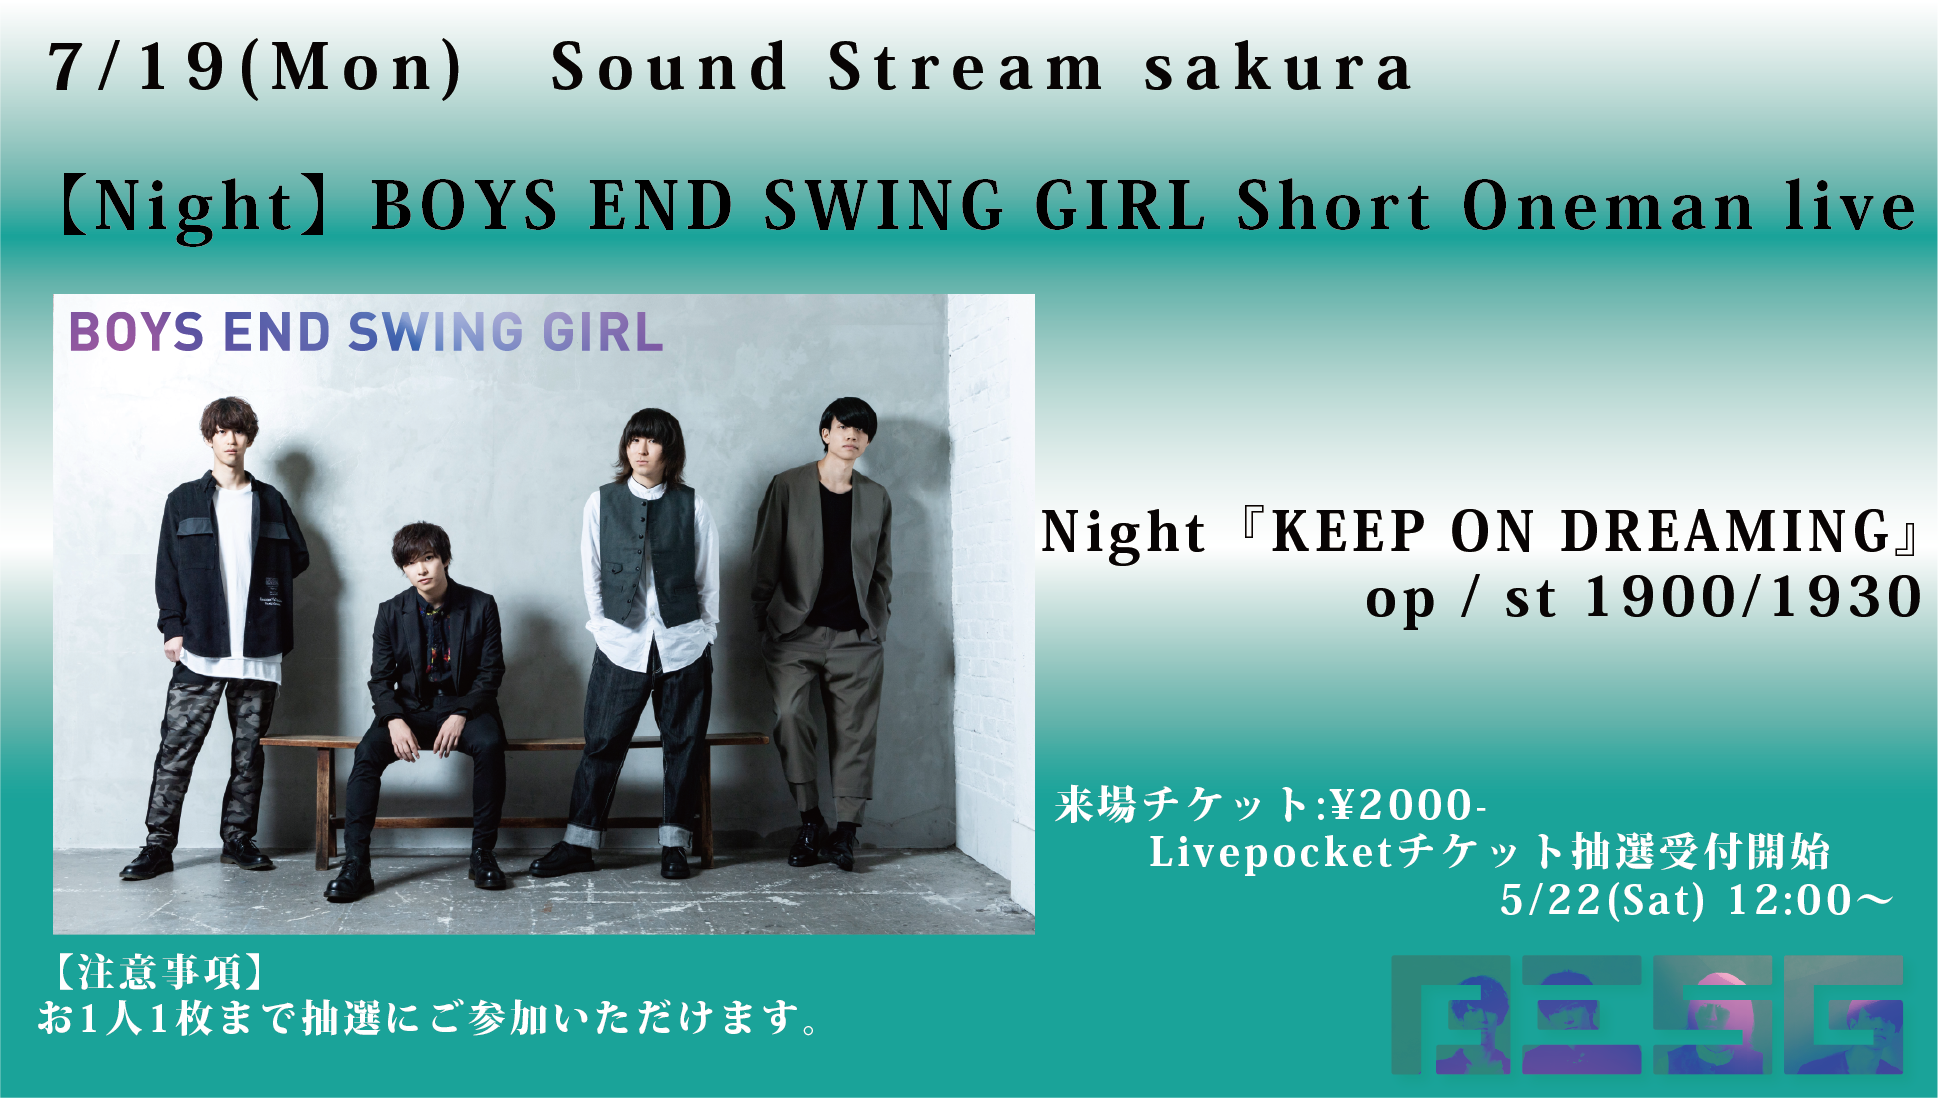 Night『KEEP ON DREAMING』BOYS END SWING GIRL Short Oneman live